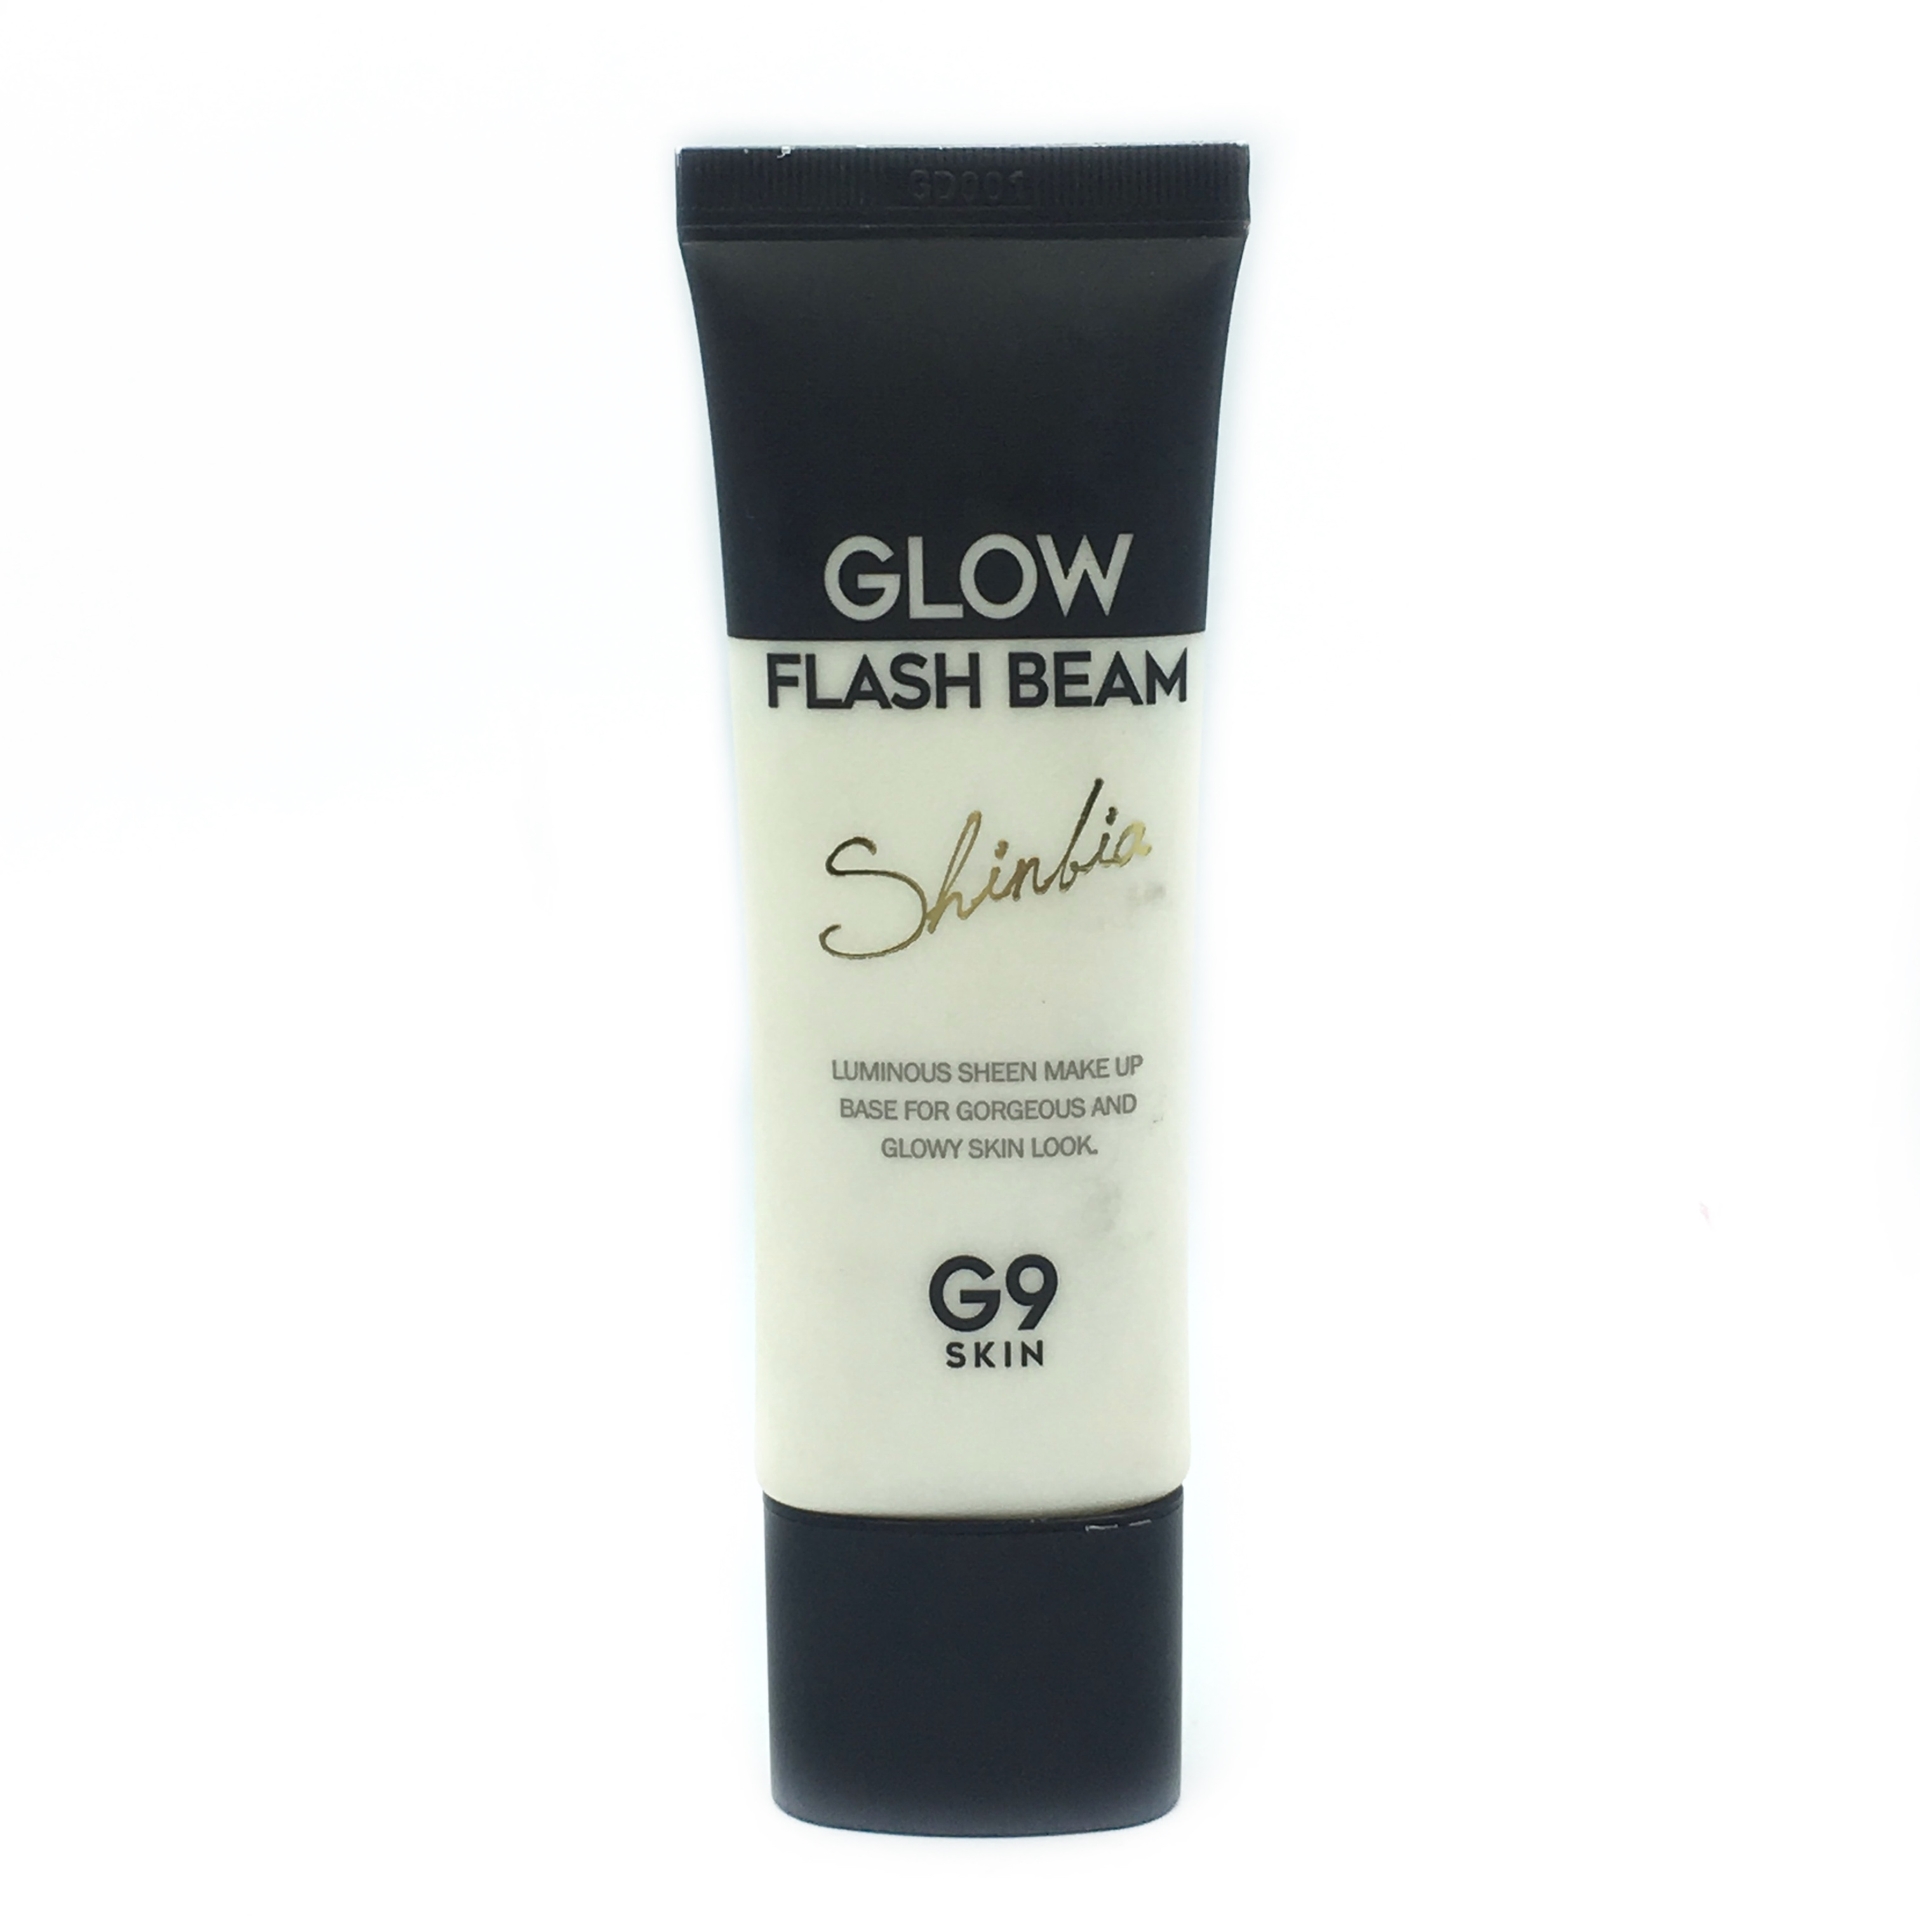 G9 Skin Glow Flash Beam Skin Care